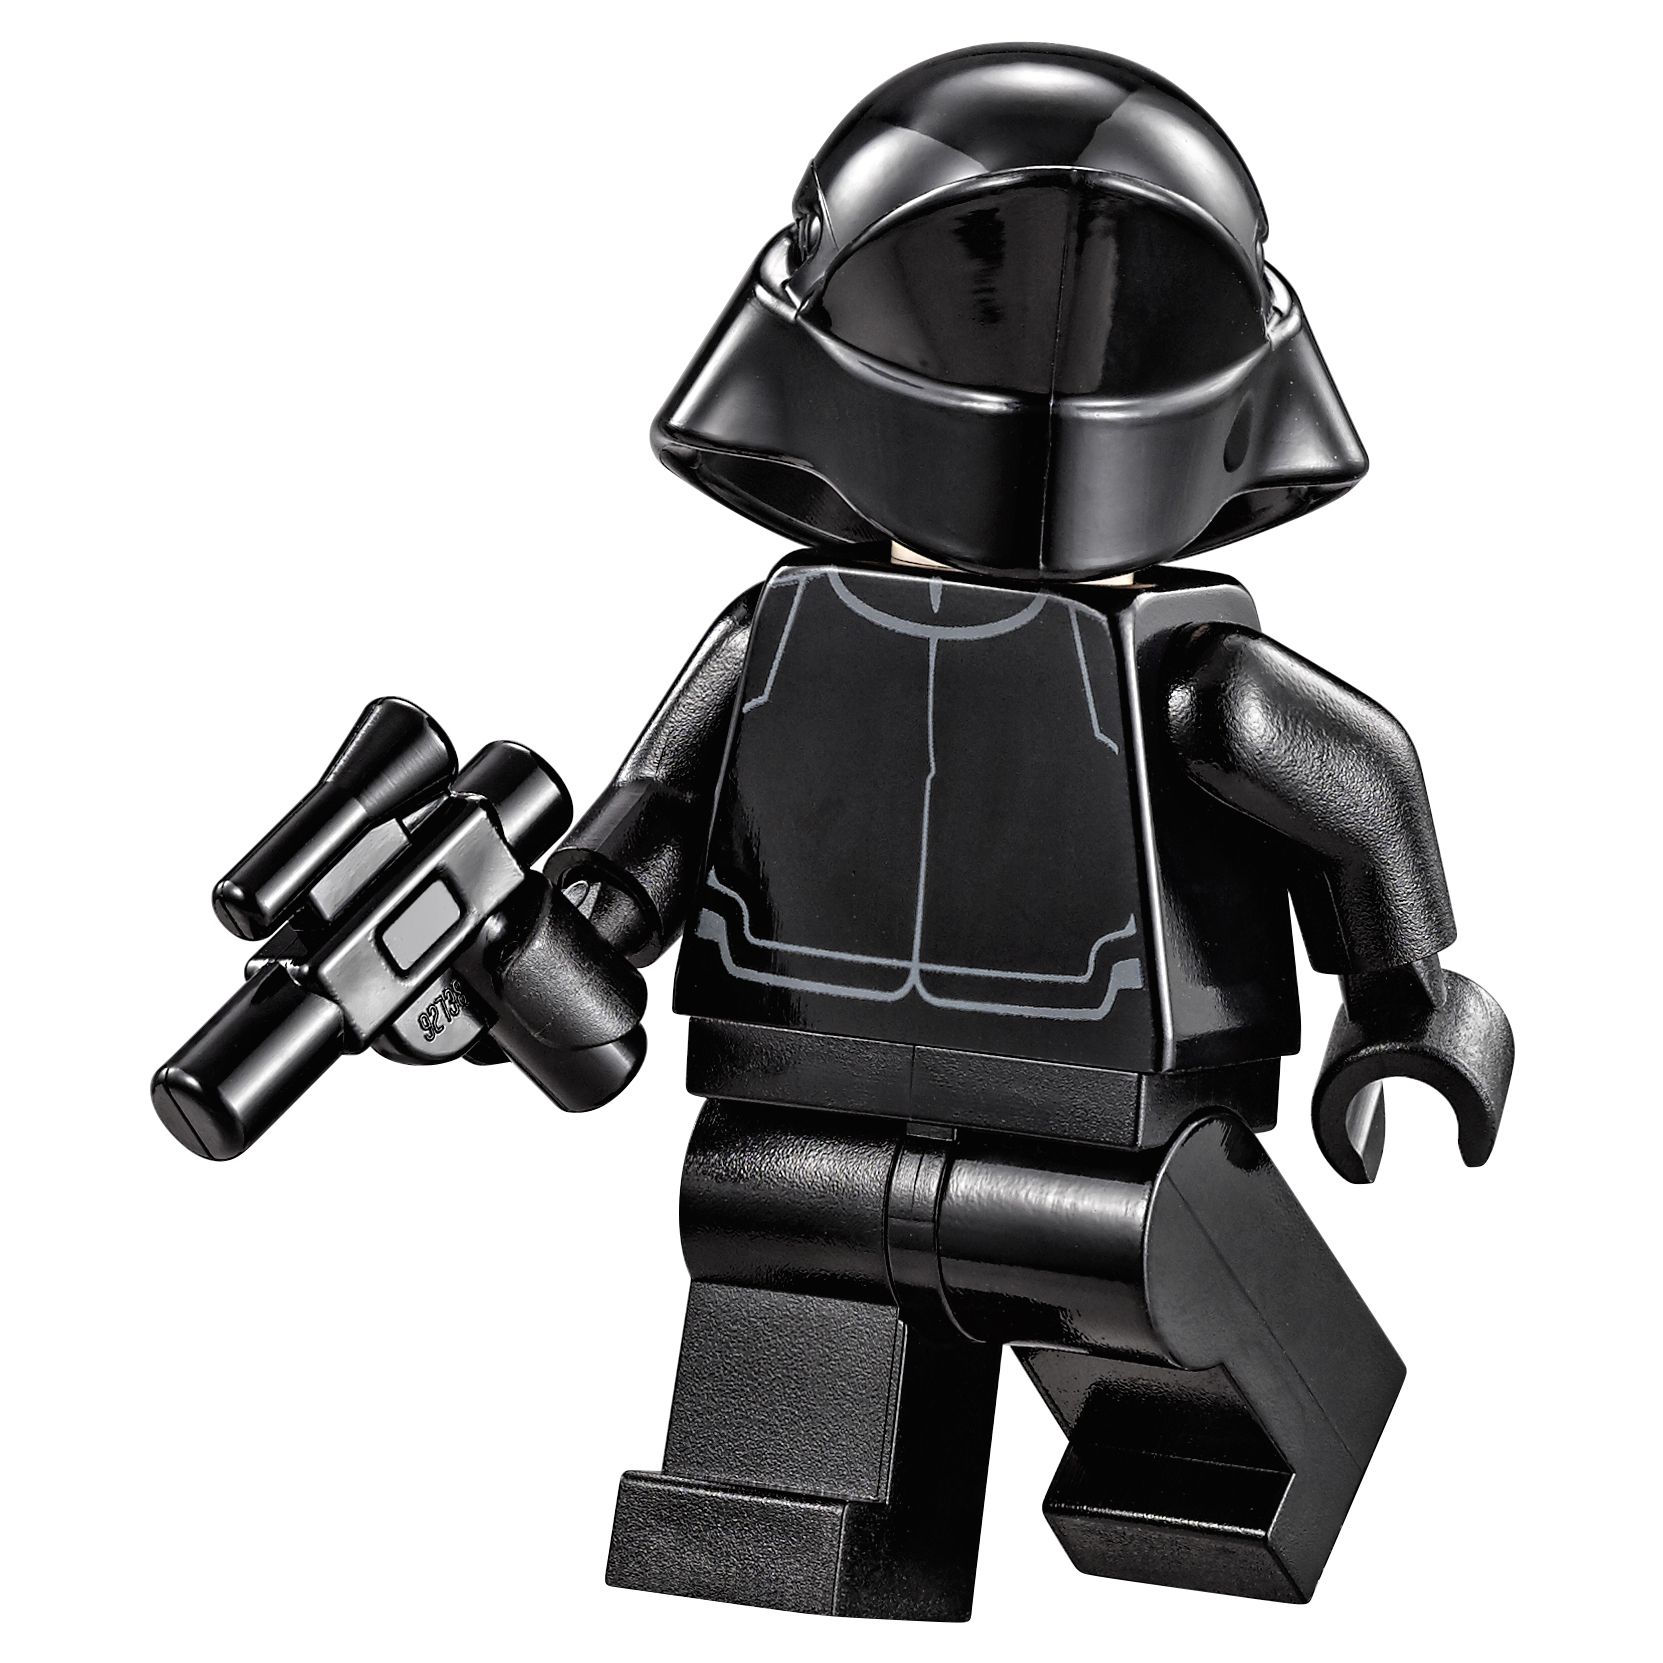 Конструктор LEGO Star Wars Командный шаттл Кайло Рена (Kylo Rens Command Shuttle) (75104)